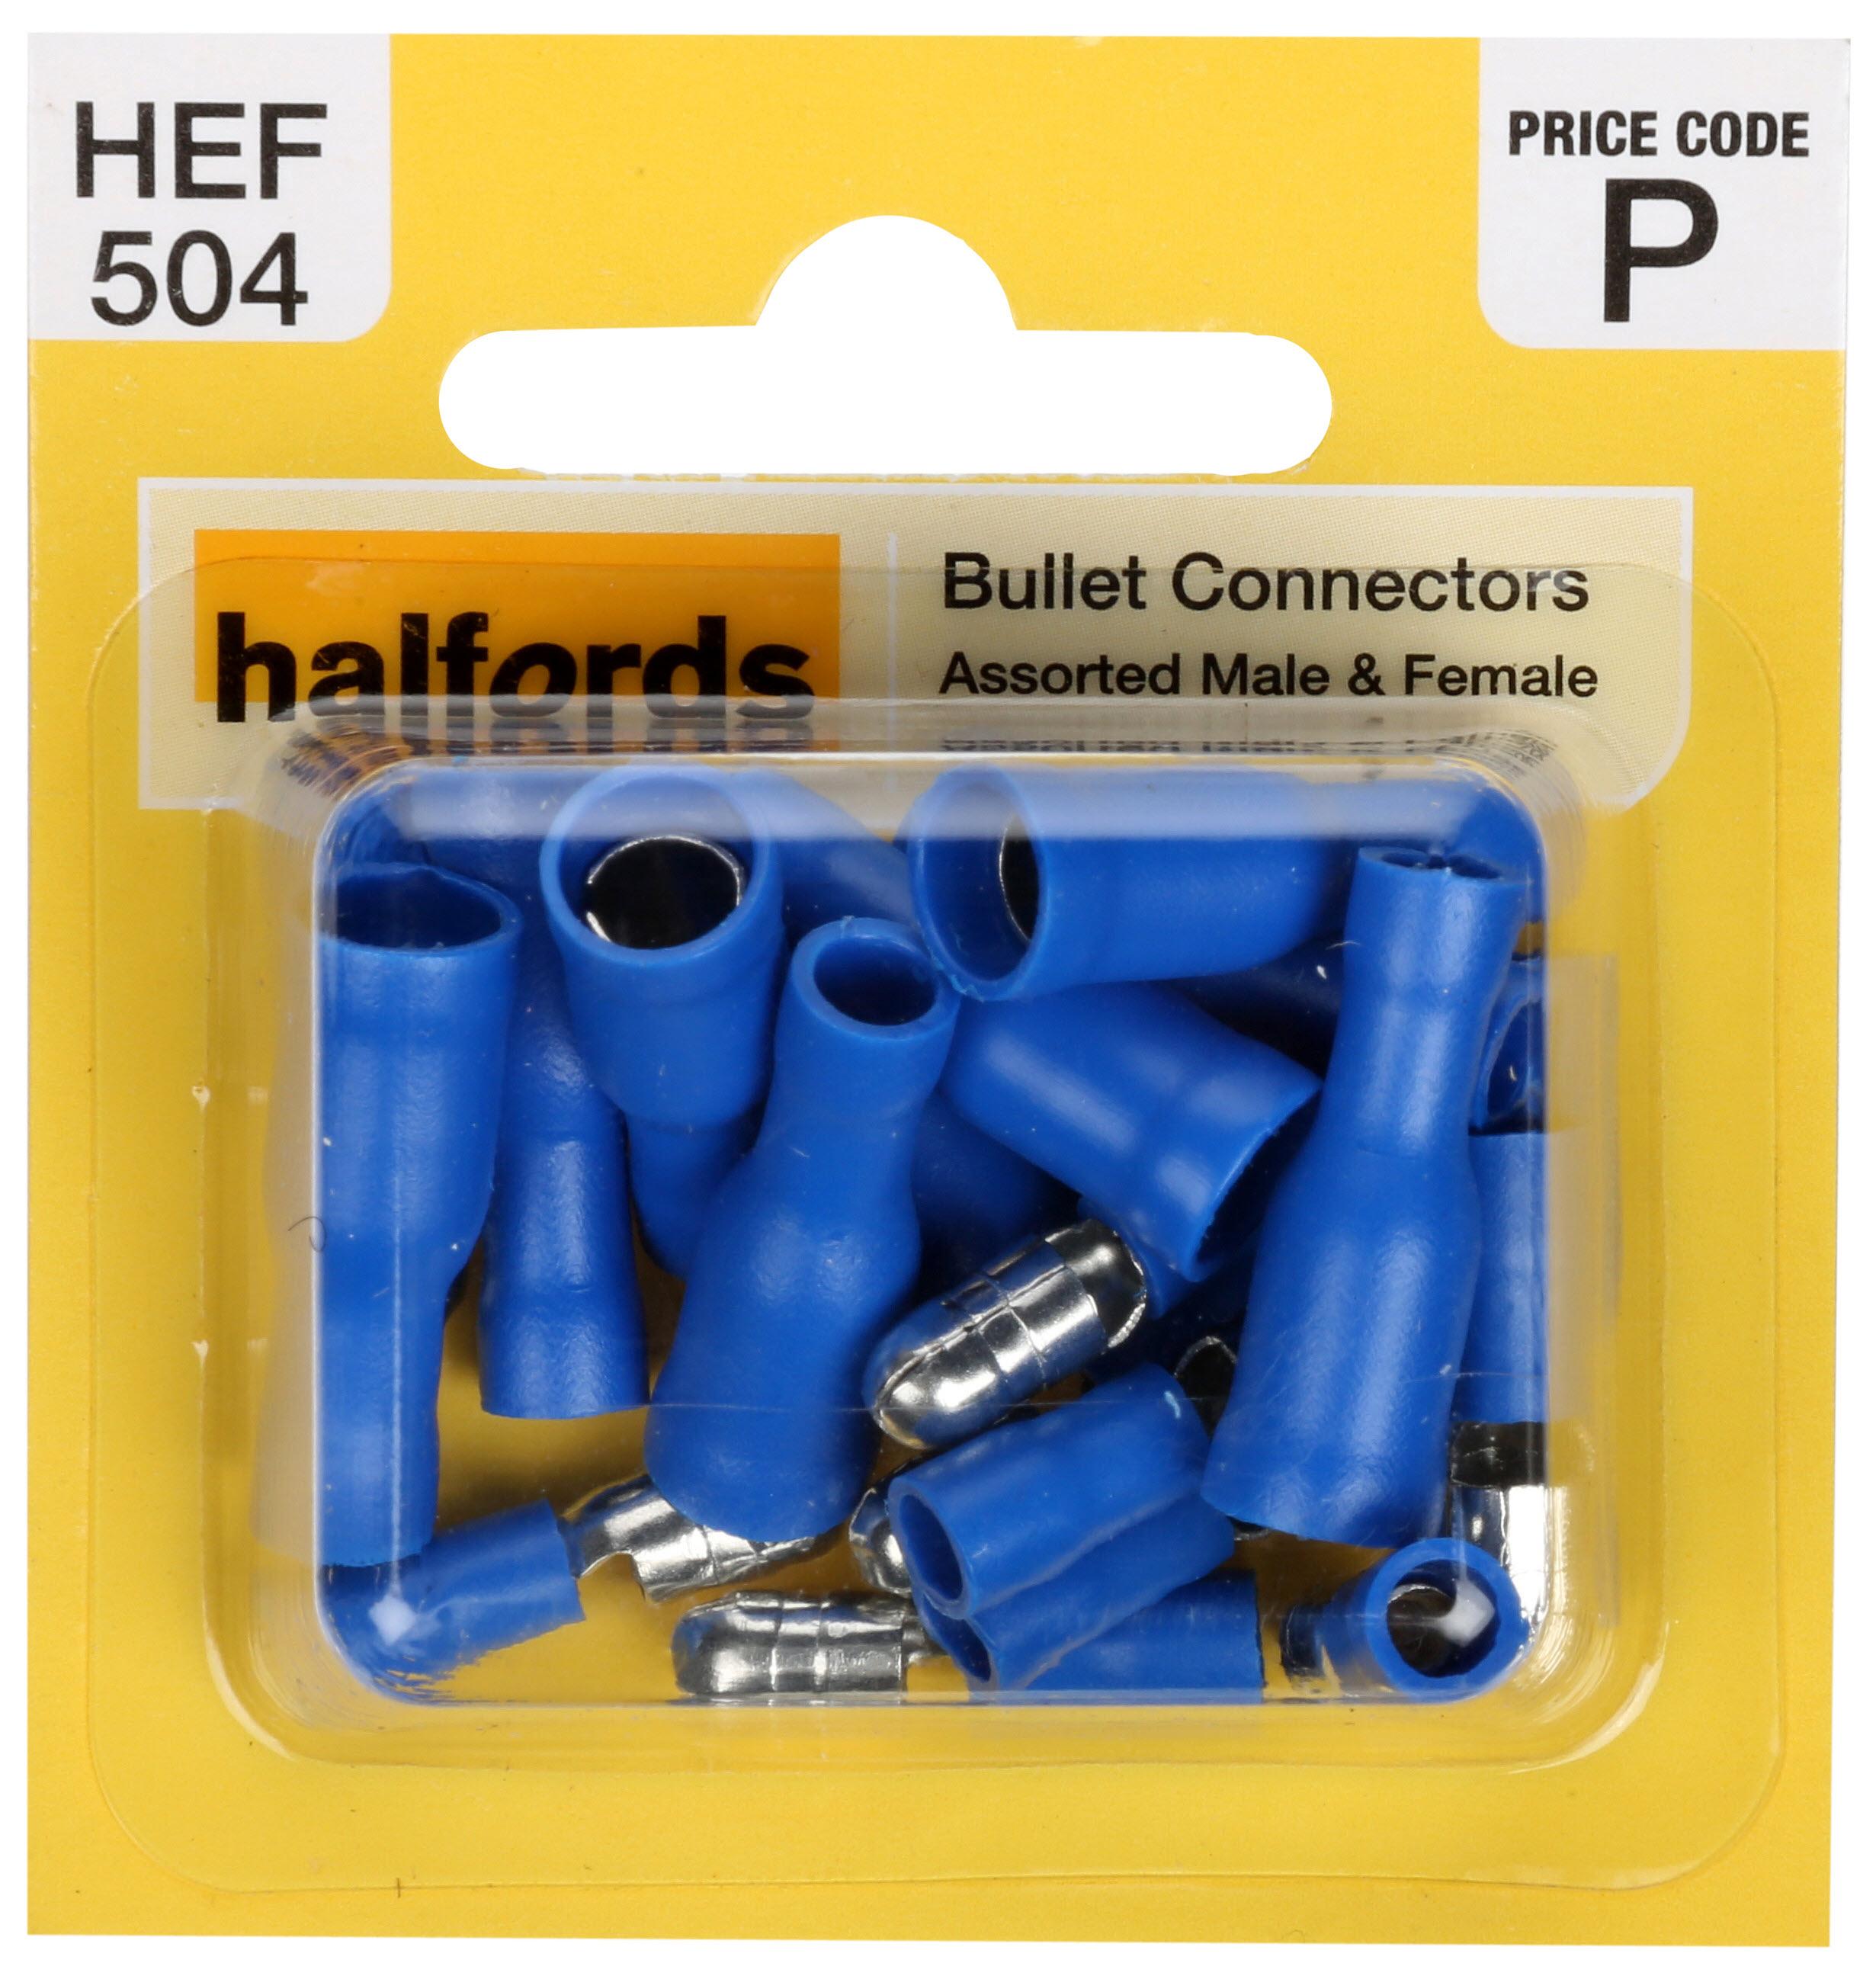 Halfords Assorted Bullet Connectors (Hef504)